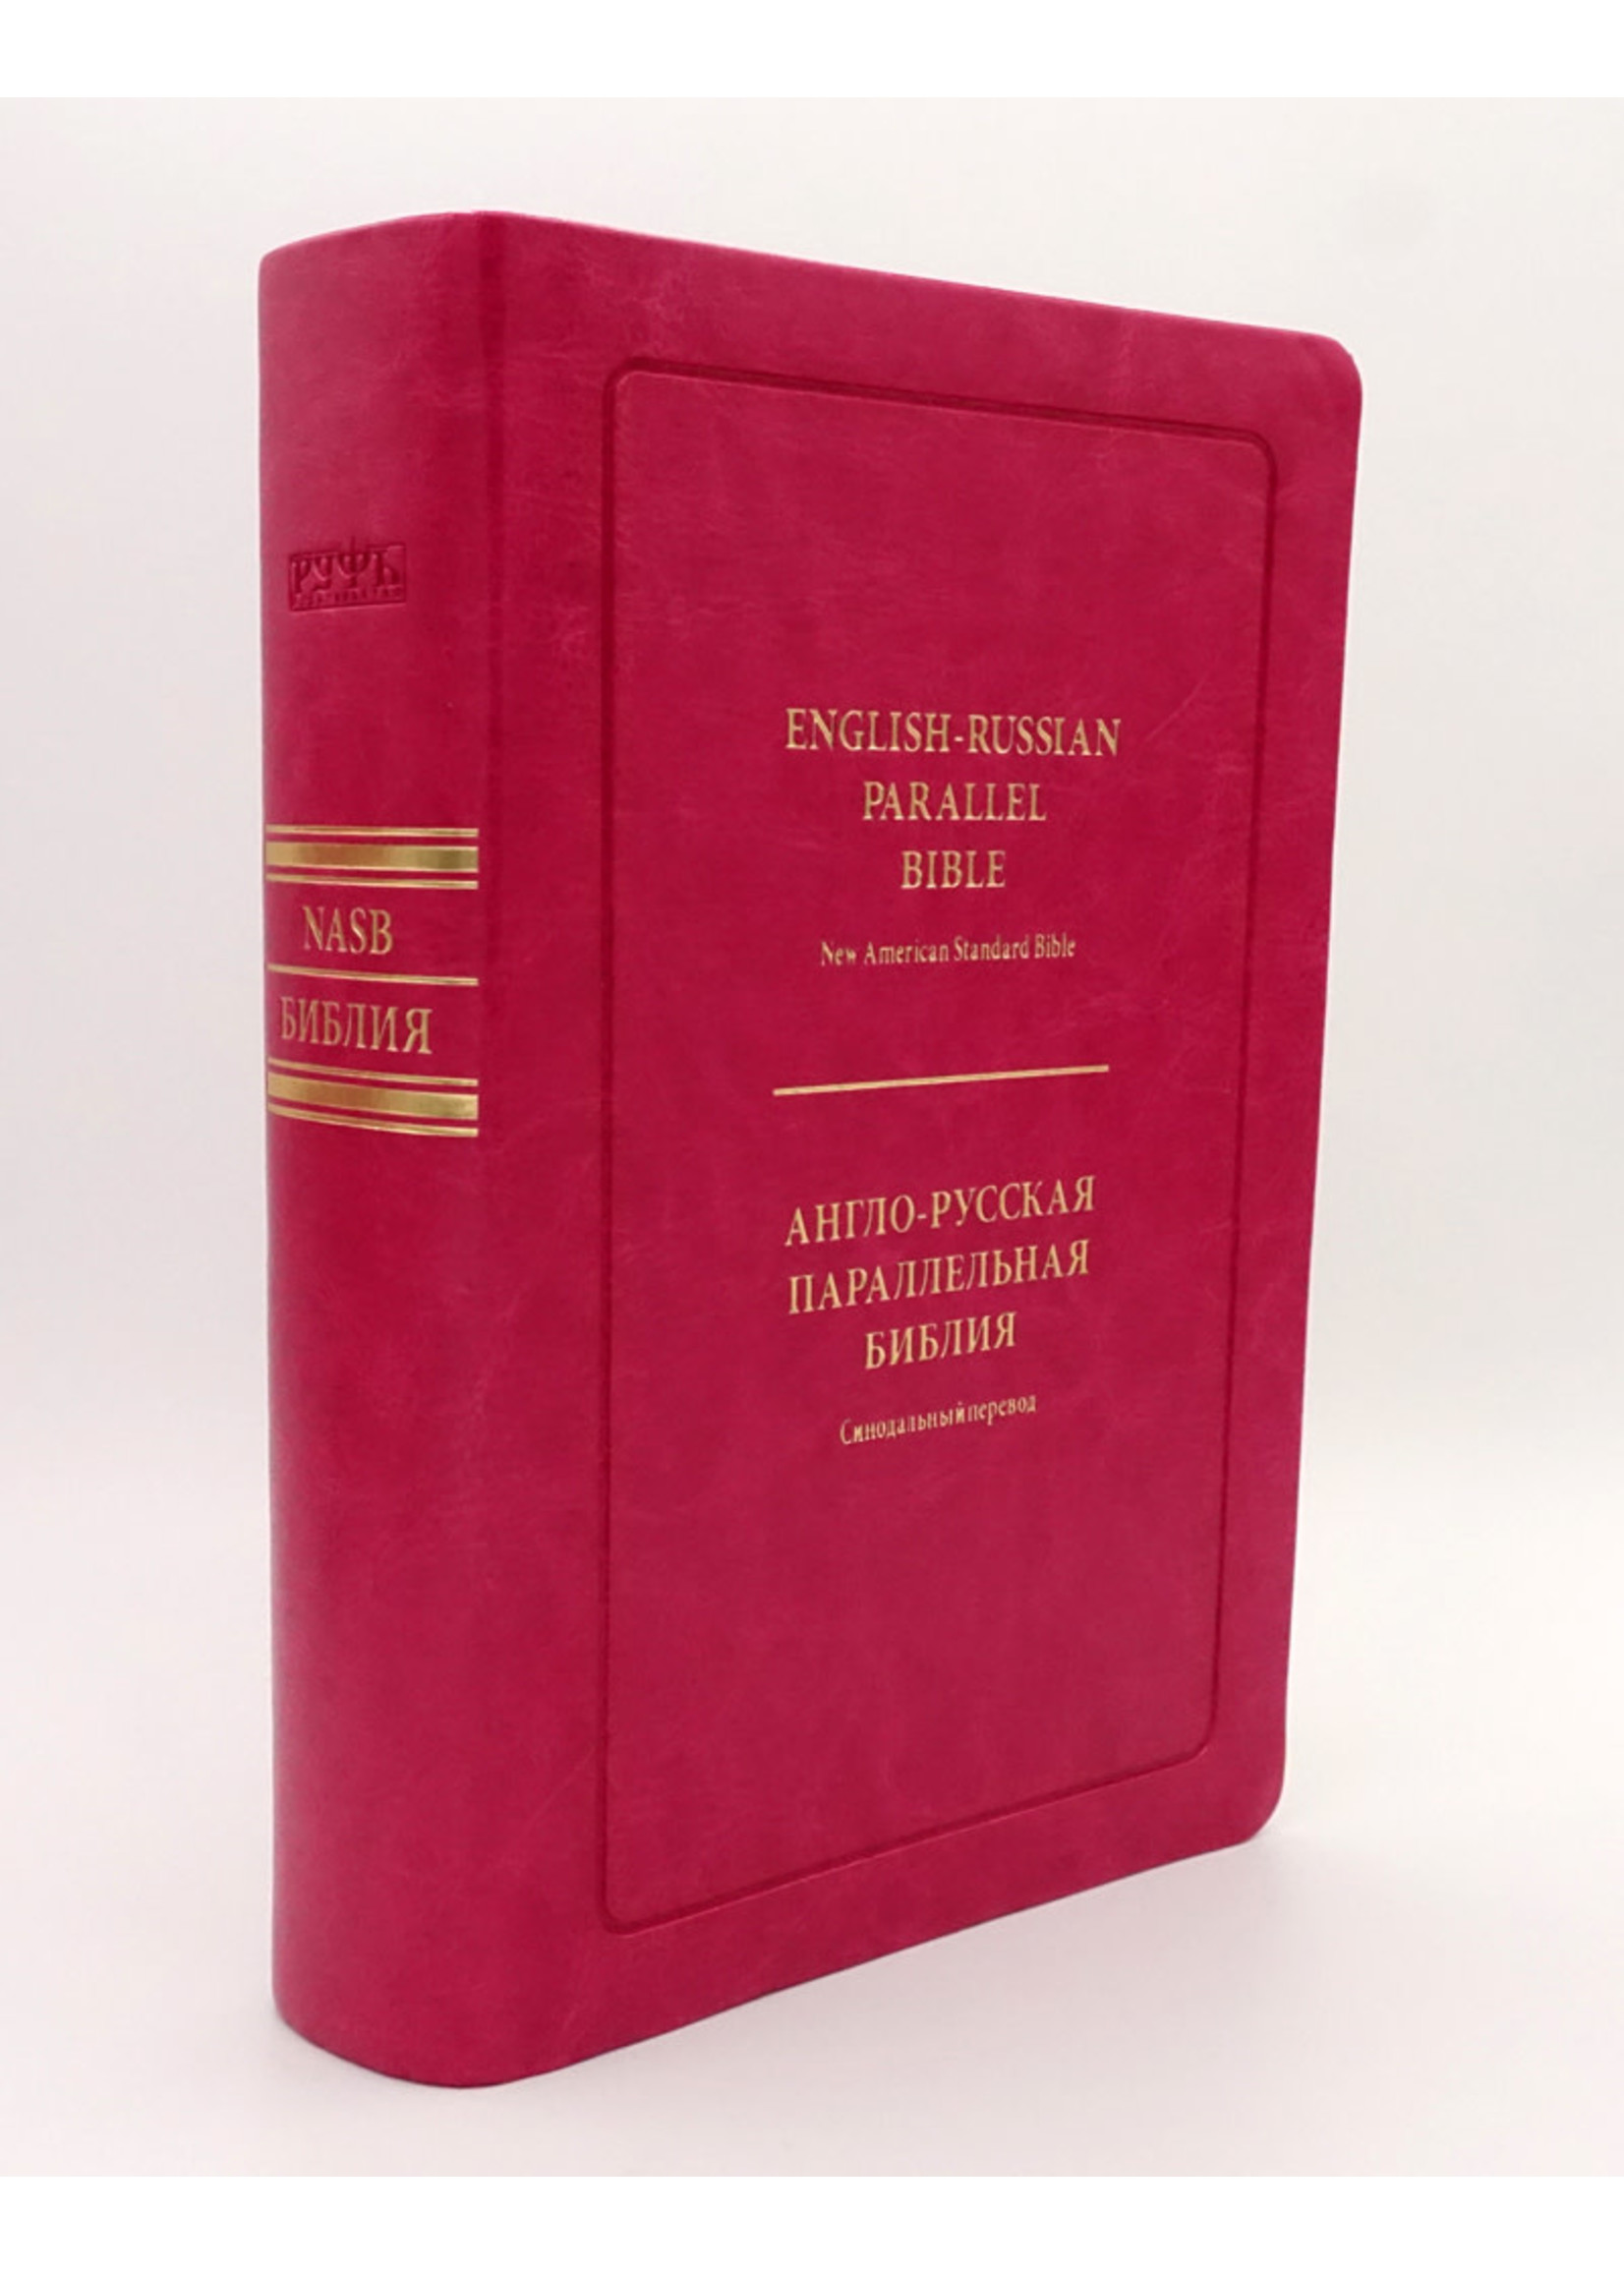 English-Russian Parallel Bible (NASB-SYNO), Index, Medium, Pink